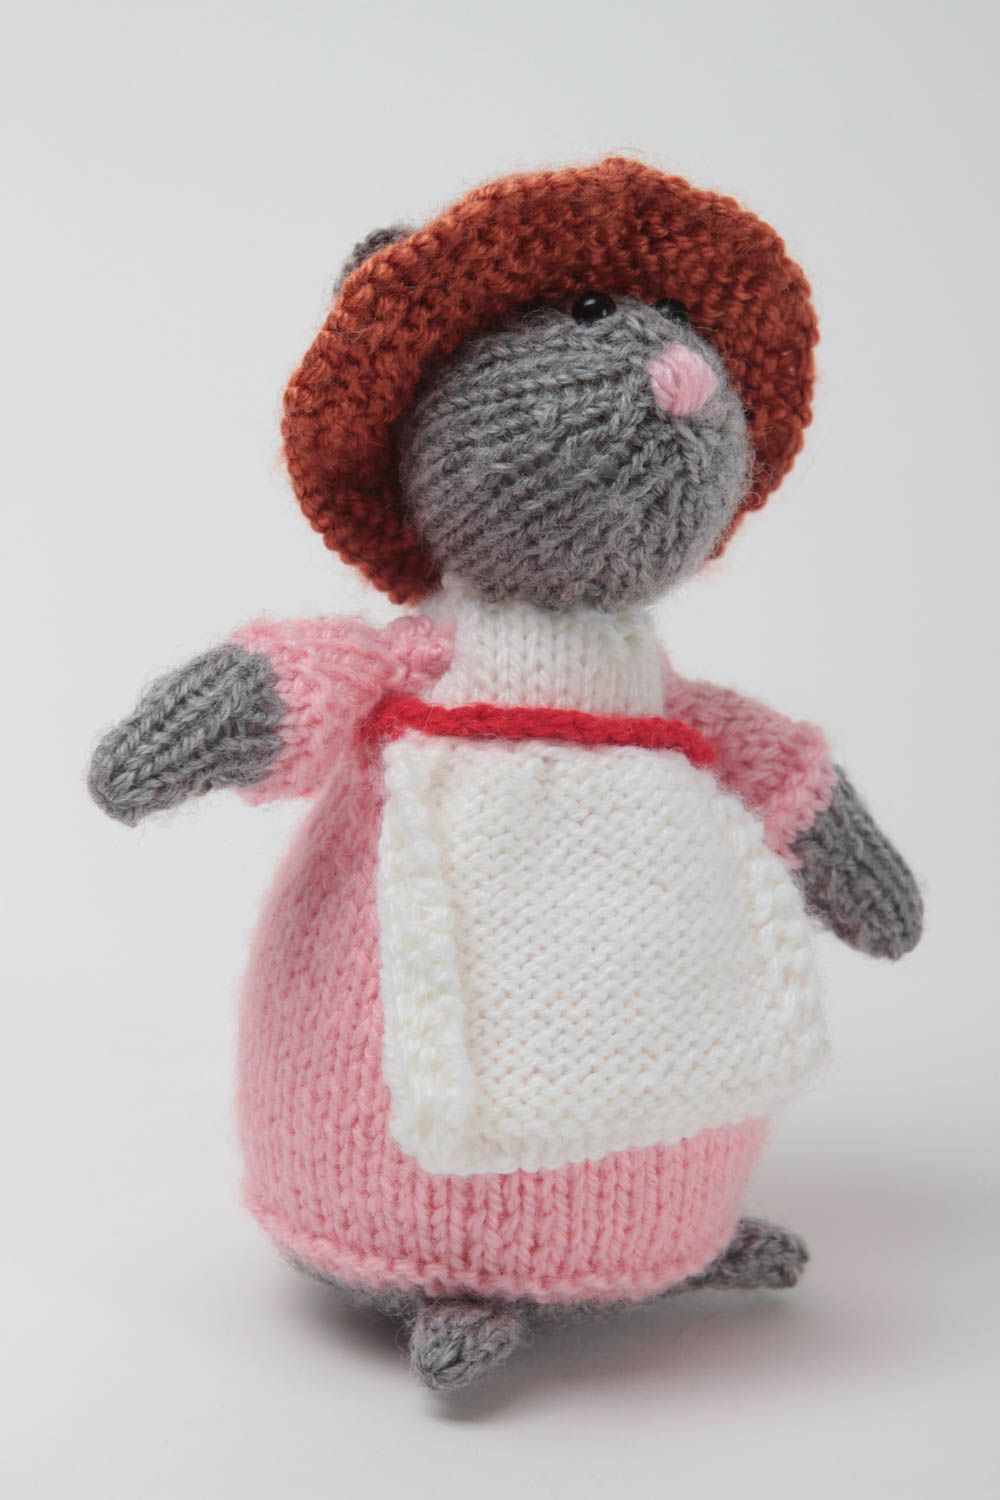 Handmade designer toy knitted soft toy for children decorative toy interior idea photo 2